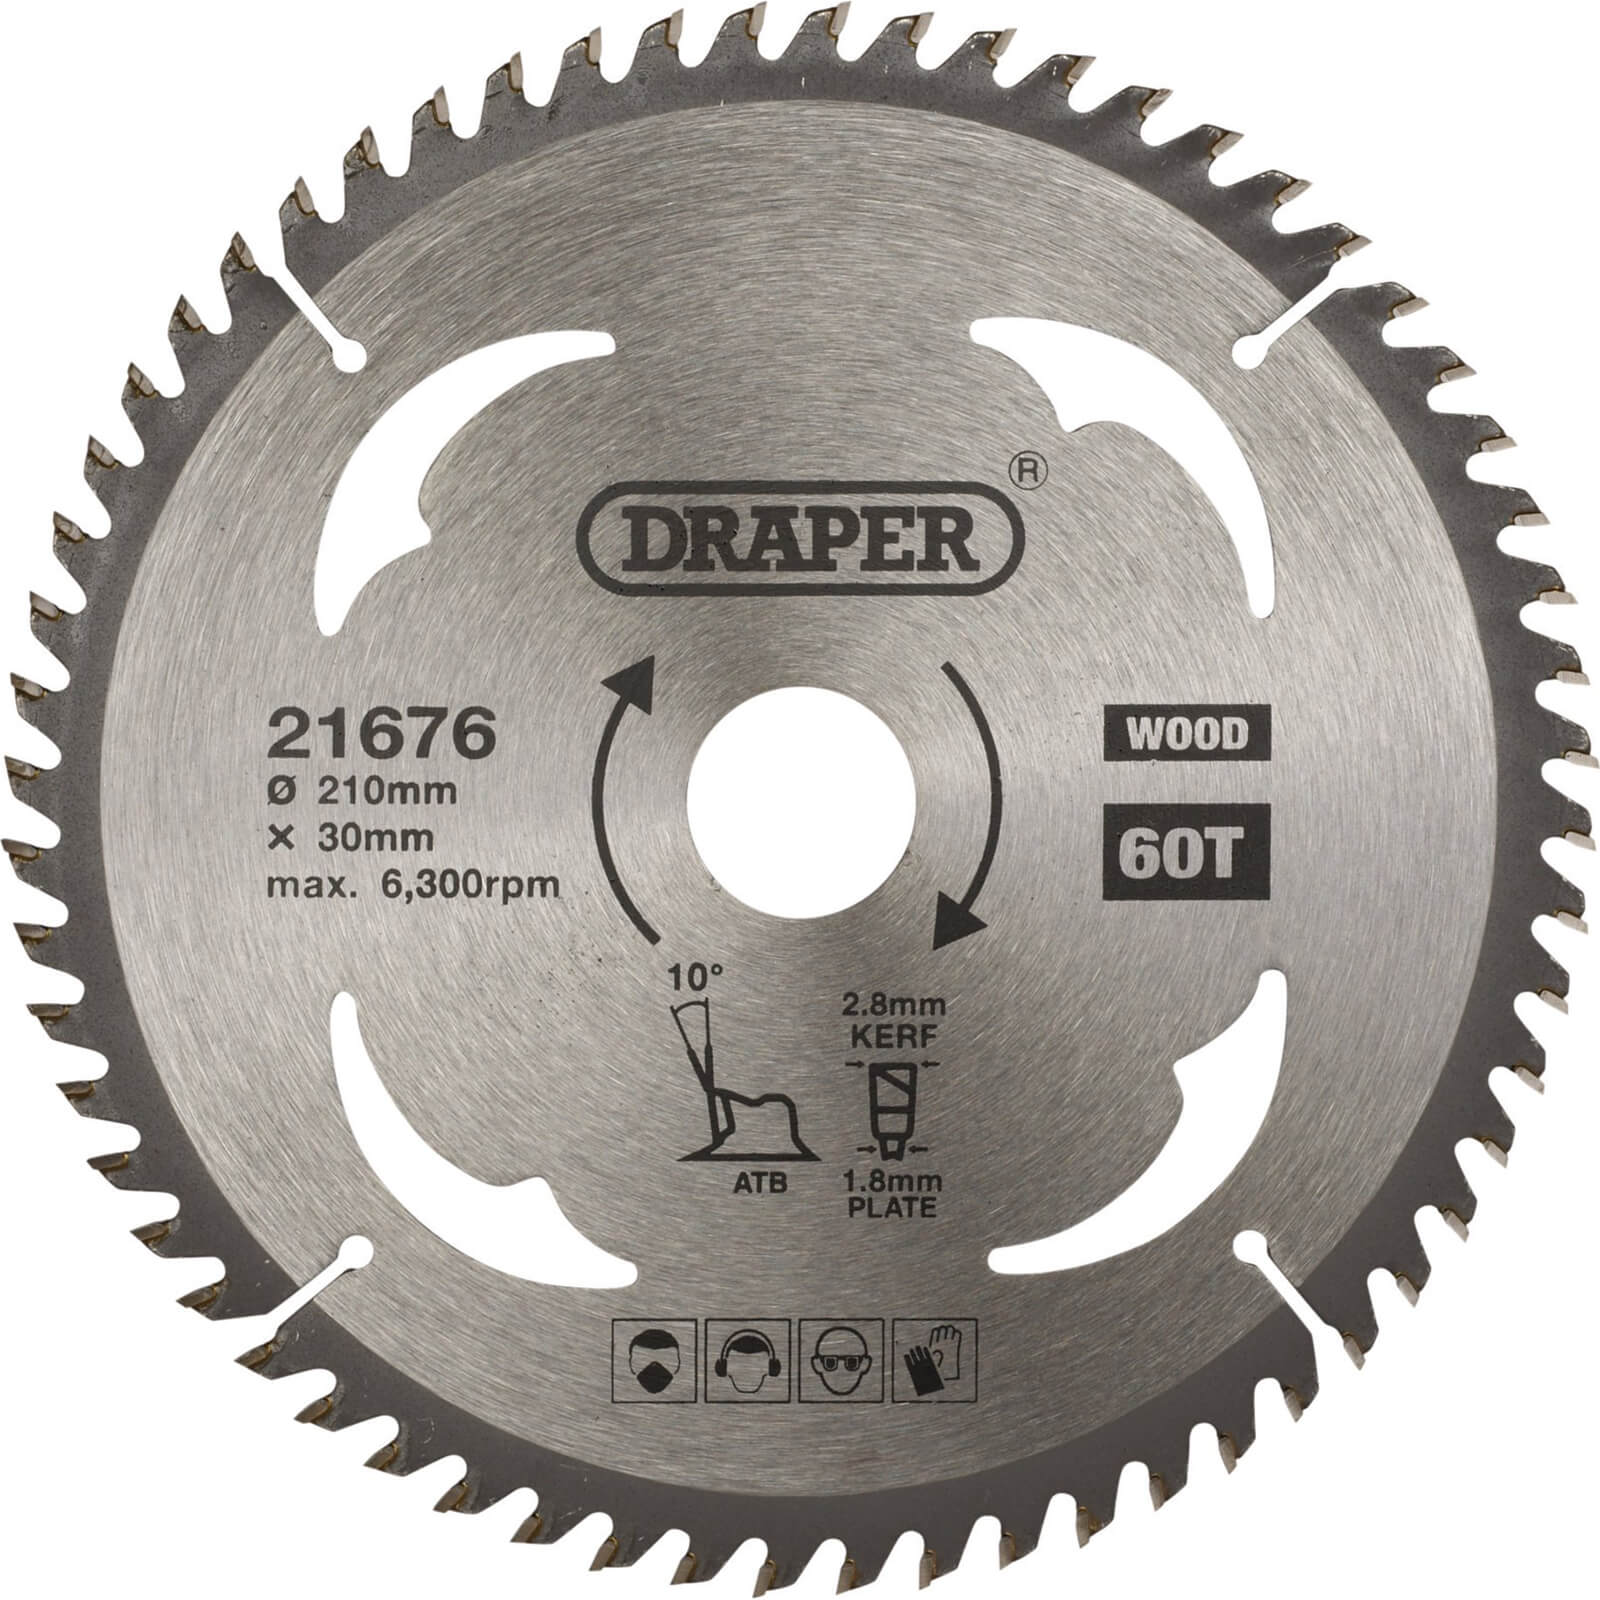 Image of Draper TCT Wood Cutting Circular Saw Blade 210mm 60T 30mm